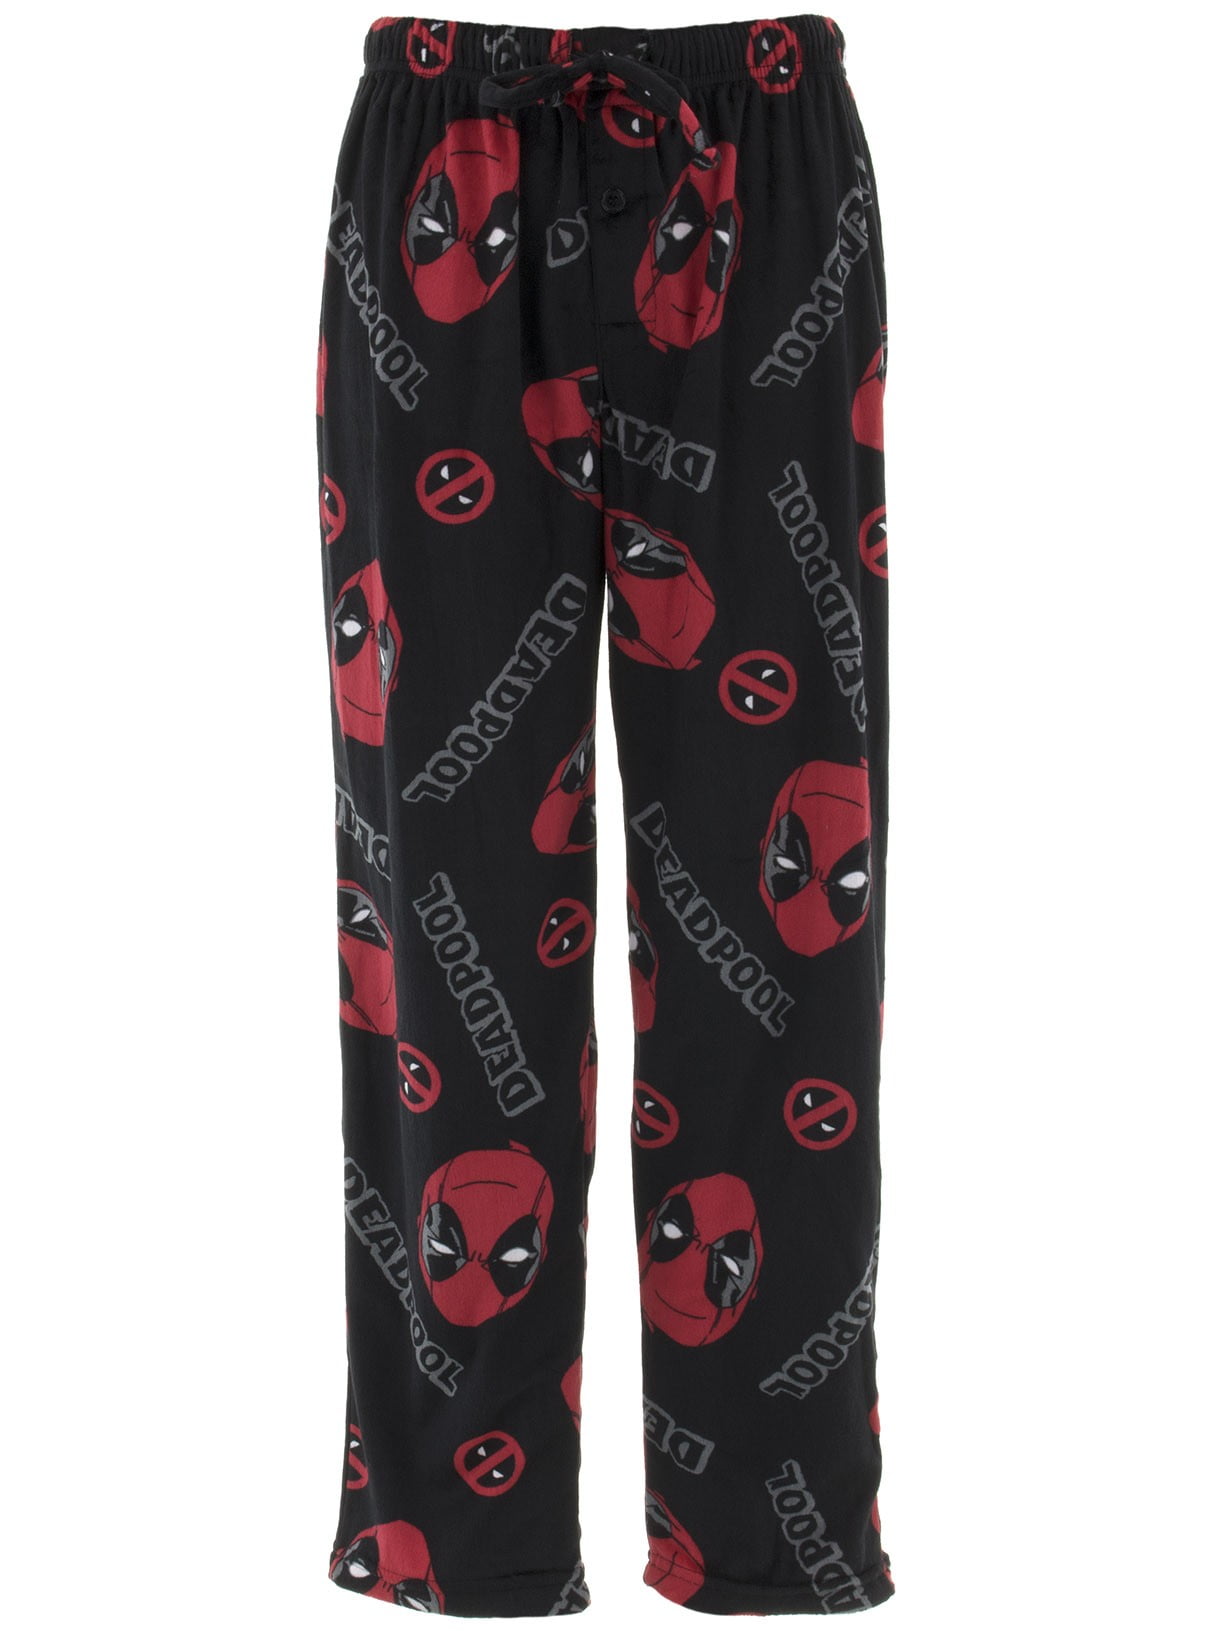 Mens Womens NEW Marvel Deadpool Black Pajama Lounge Sleep Pants Size S M L XL 